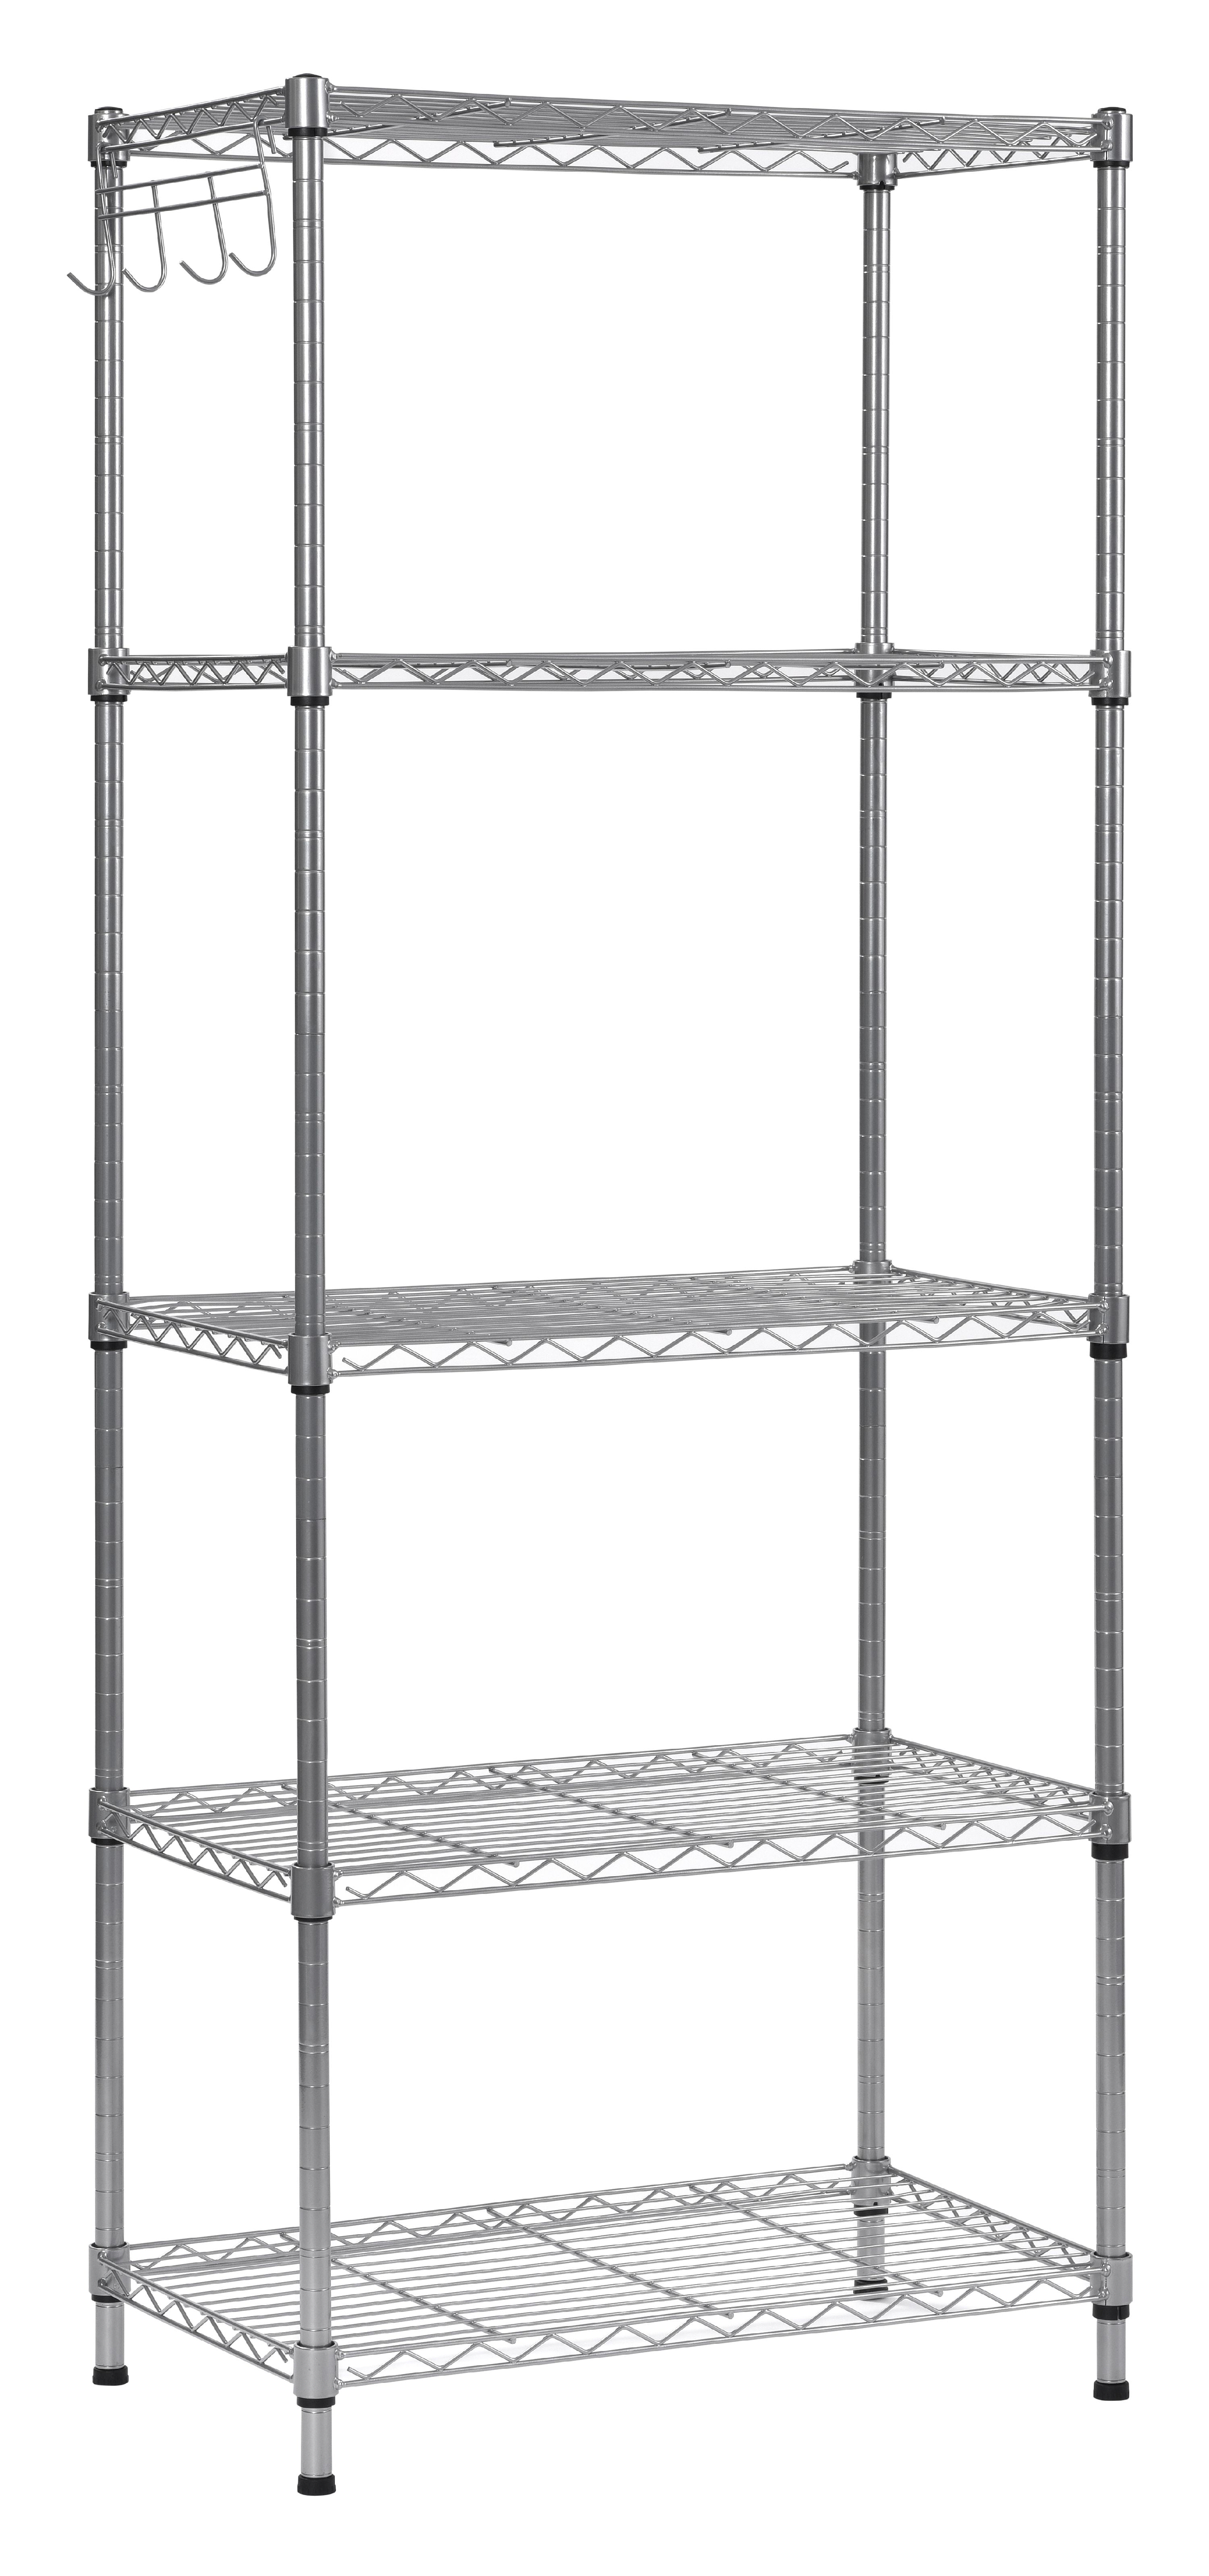 Details about   Home Basics Wire 46.5" High Four Shelf Shelving Unit Grey Black